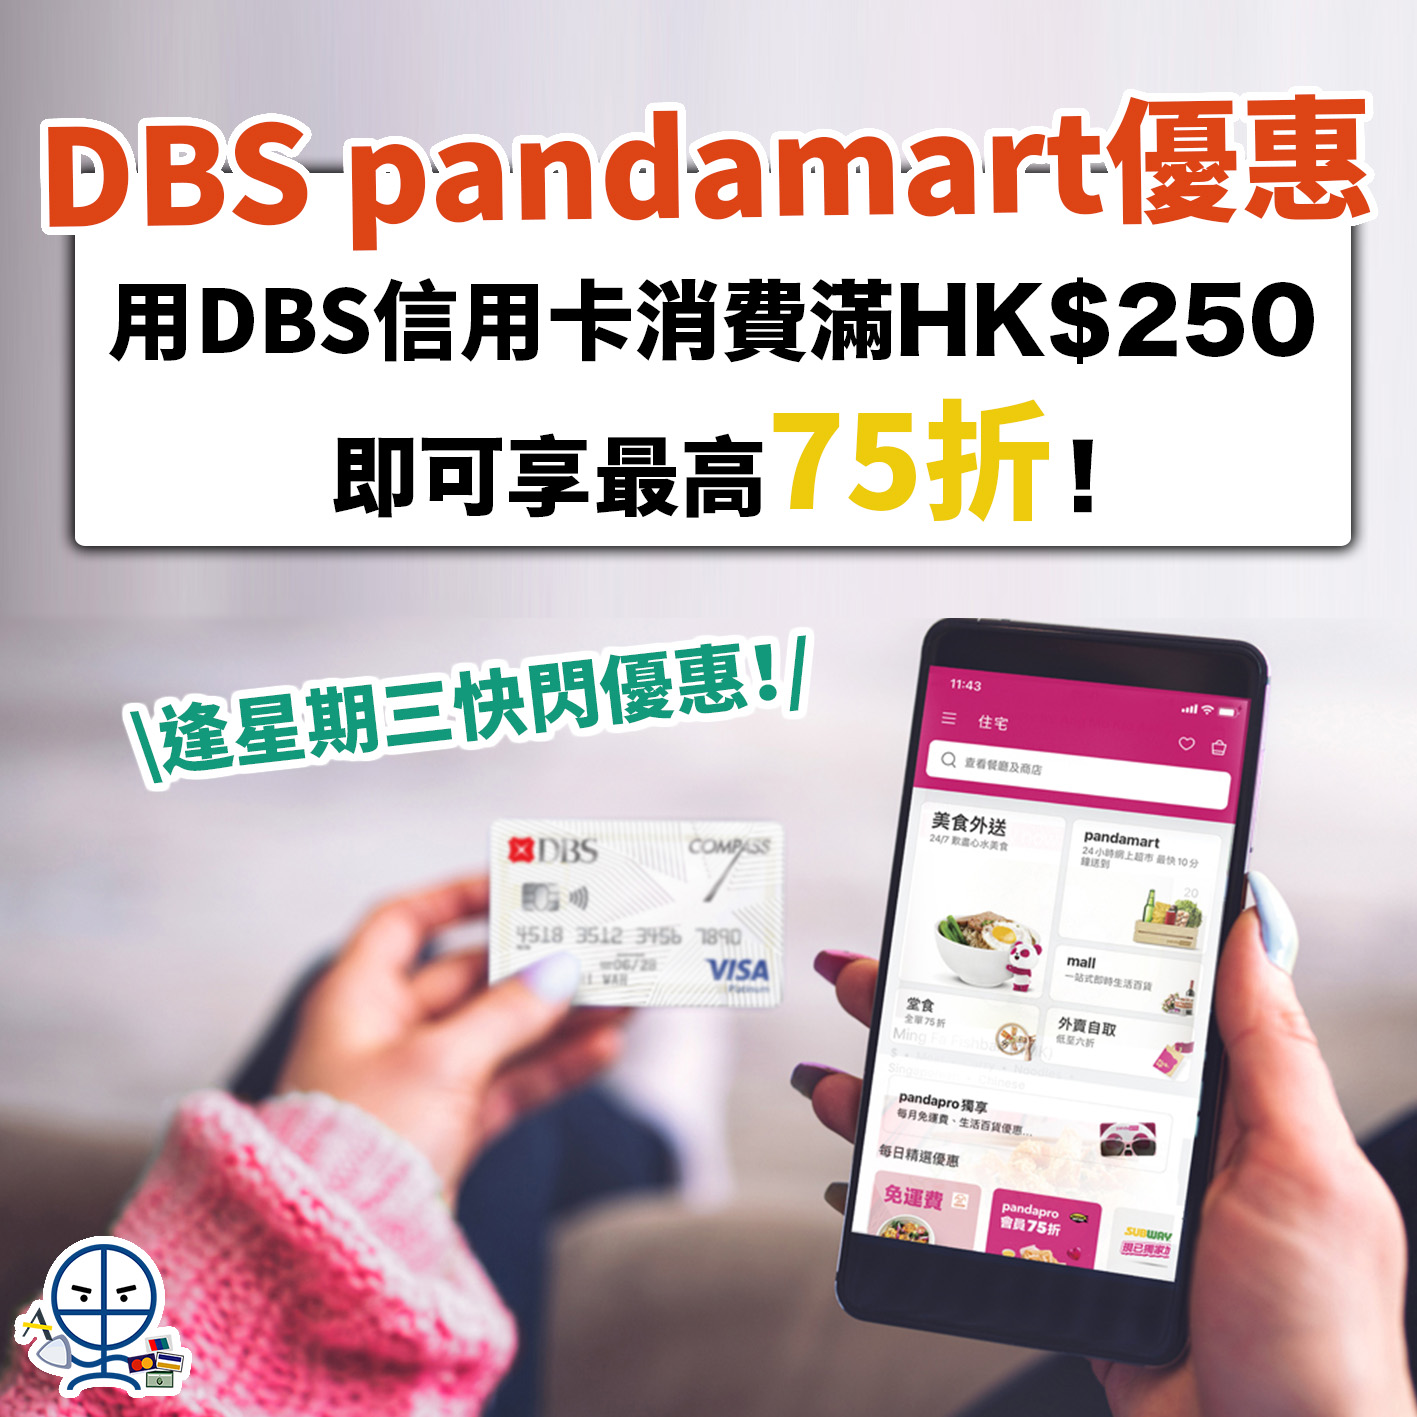 DBS-foodpanda-優惠-碼-pandamart-1